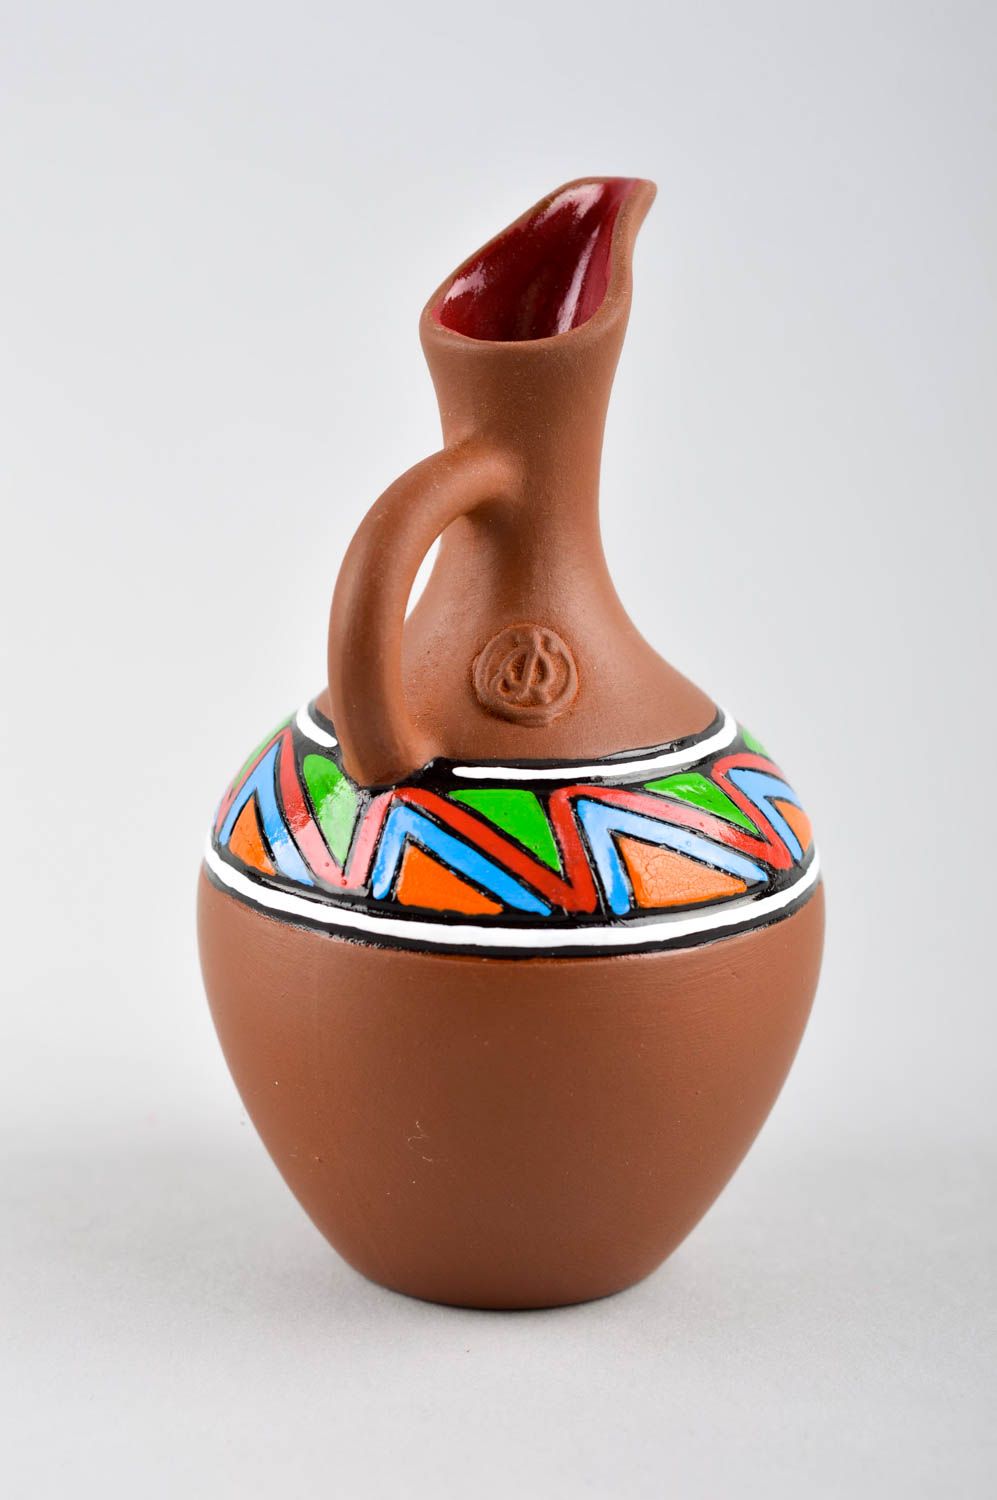 5 oz ceramic handmade wine carafe in terracotta color 0,16 lb photo 3